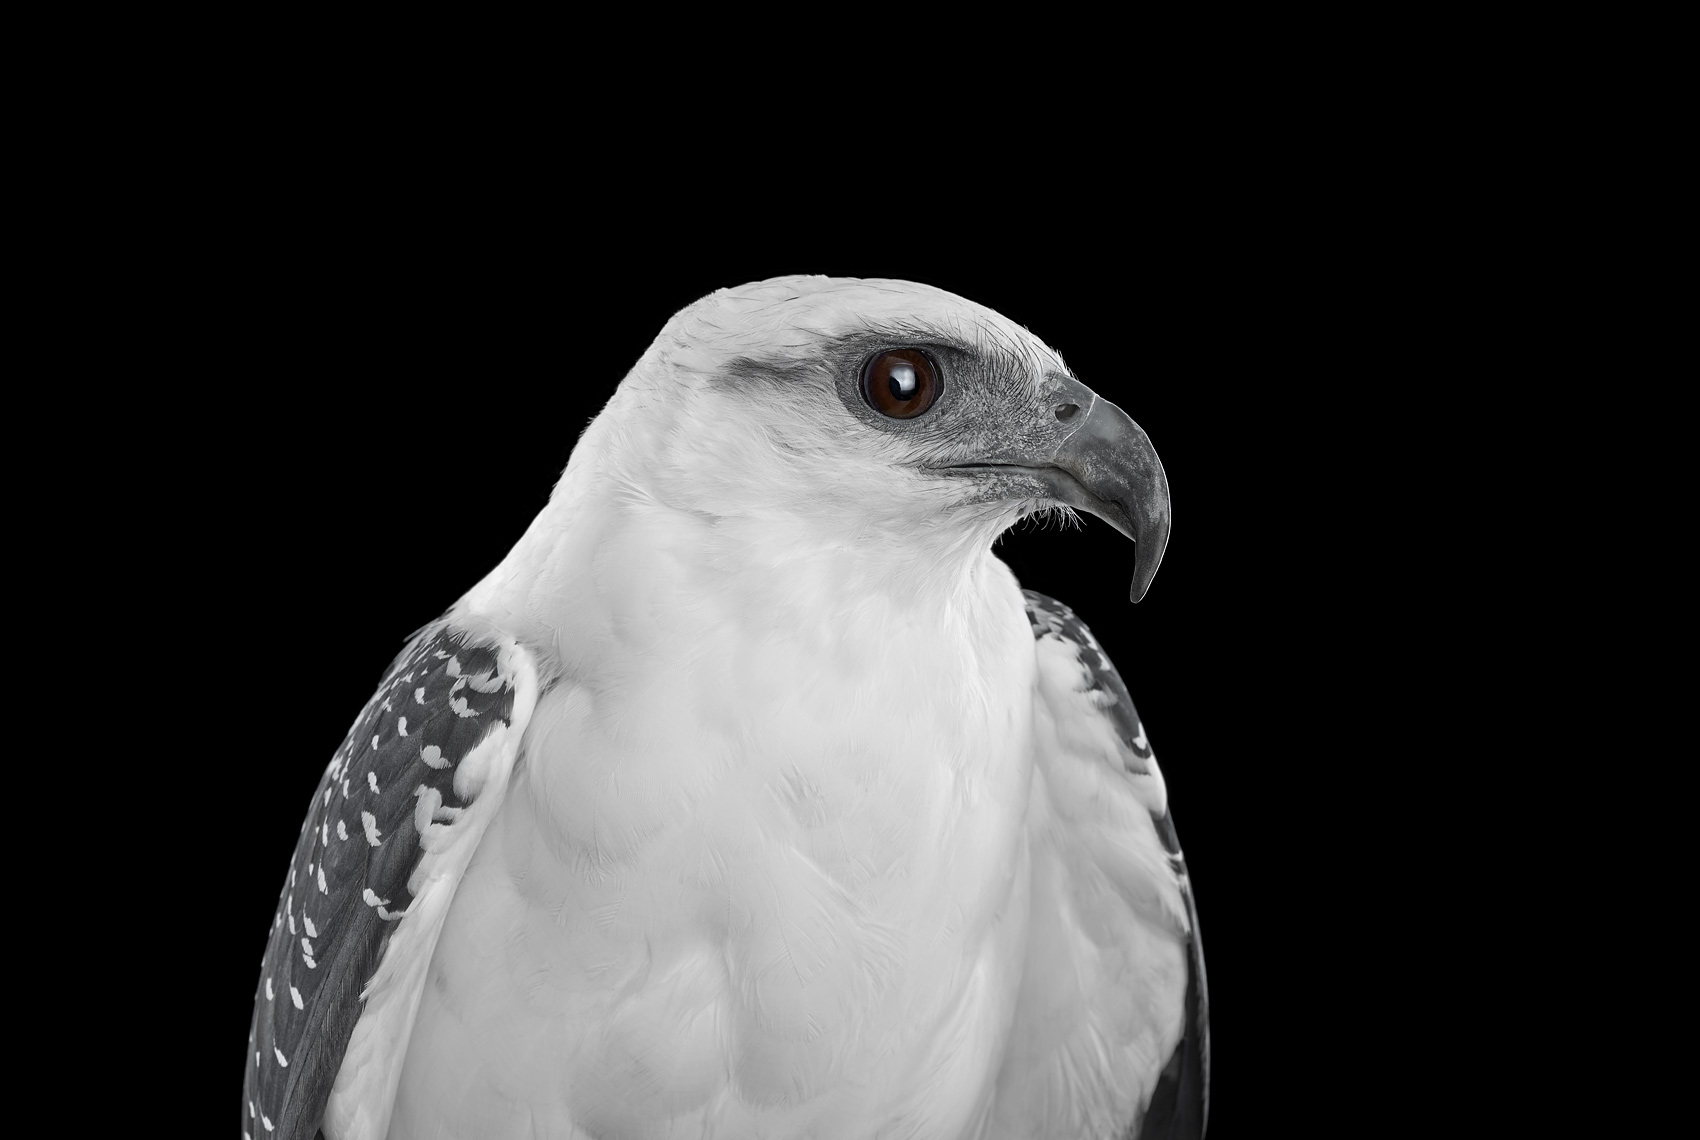 White hawk profile portrait by fine art animal photographer Brad Wilson